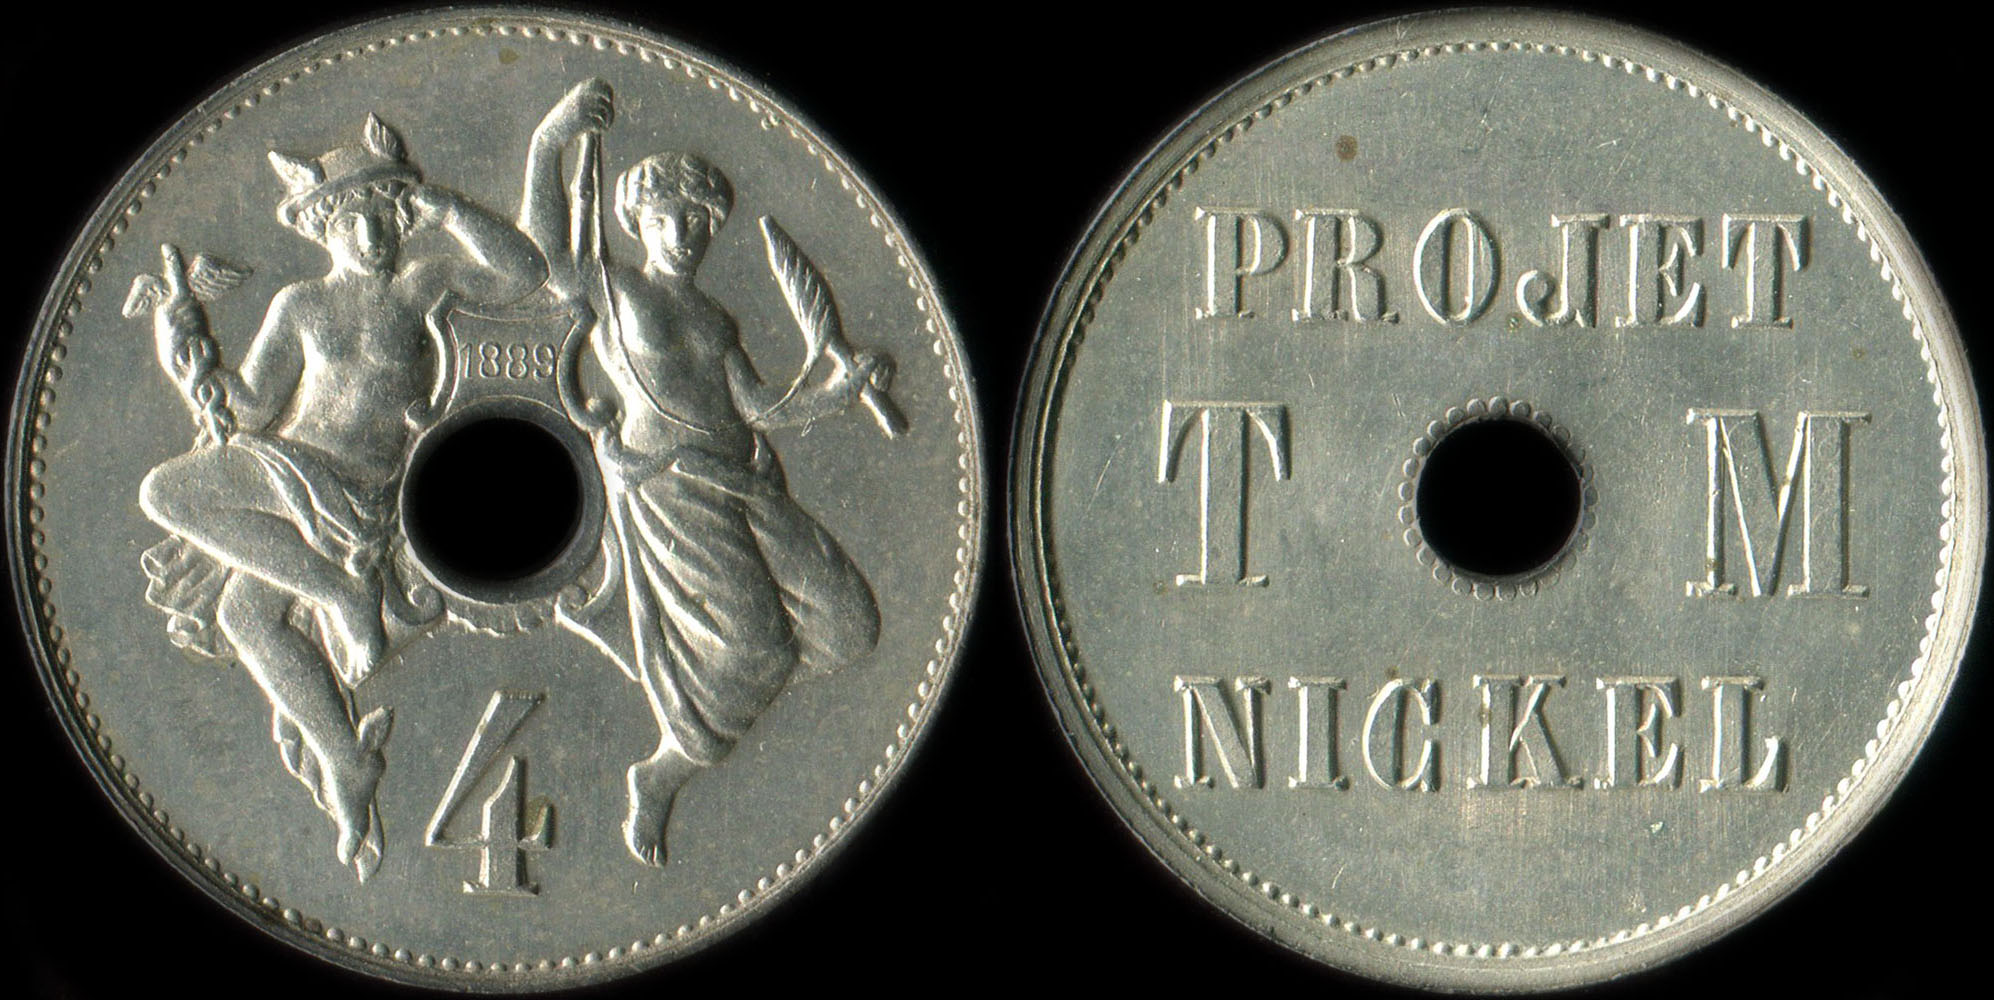 Projet TM nickel - 1889 - 4 (Thodore Michelin) - Nickel - 3,49 grammes - 22,4 mm - tranche lisse.